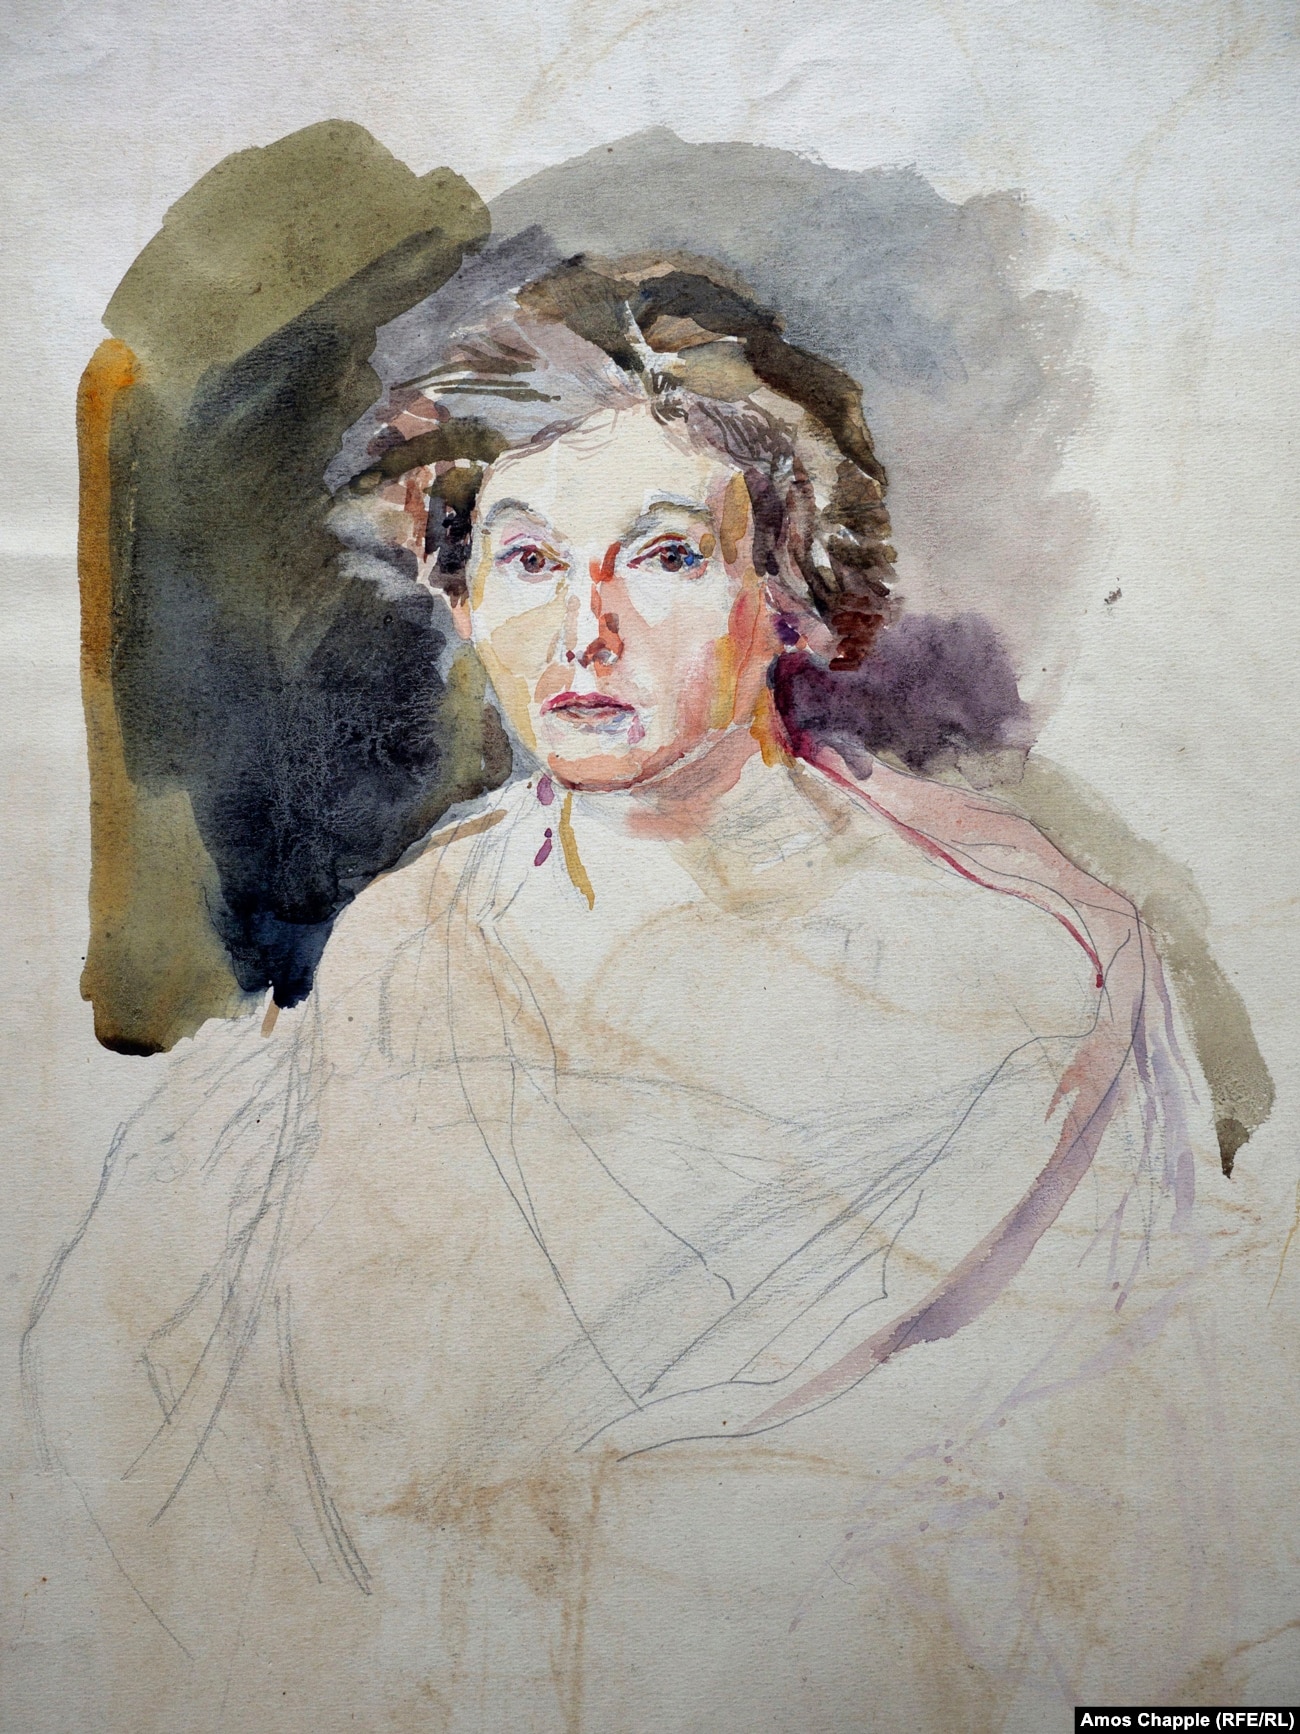 A self-portrait of Gertrude Kauders